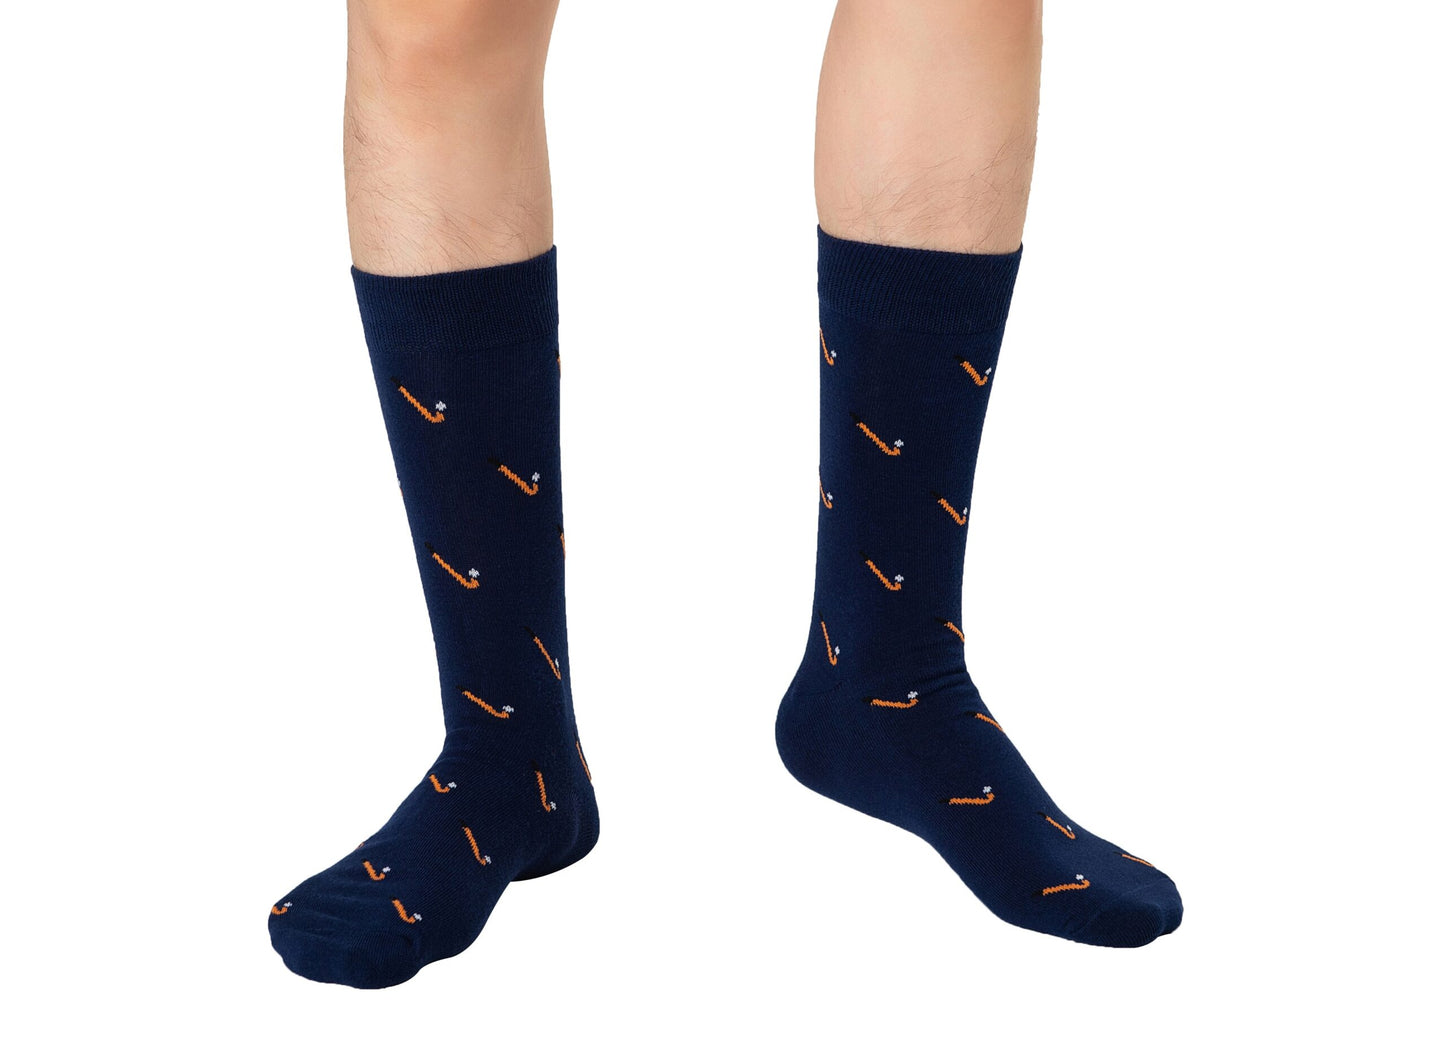 A pair of legs wearing Field Hockey Socks.